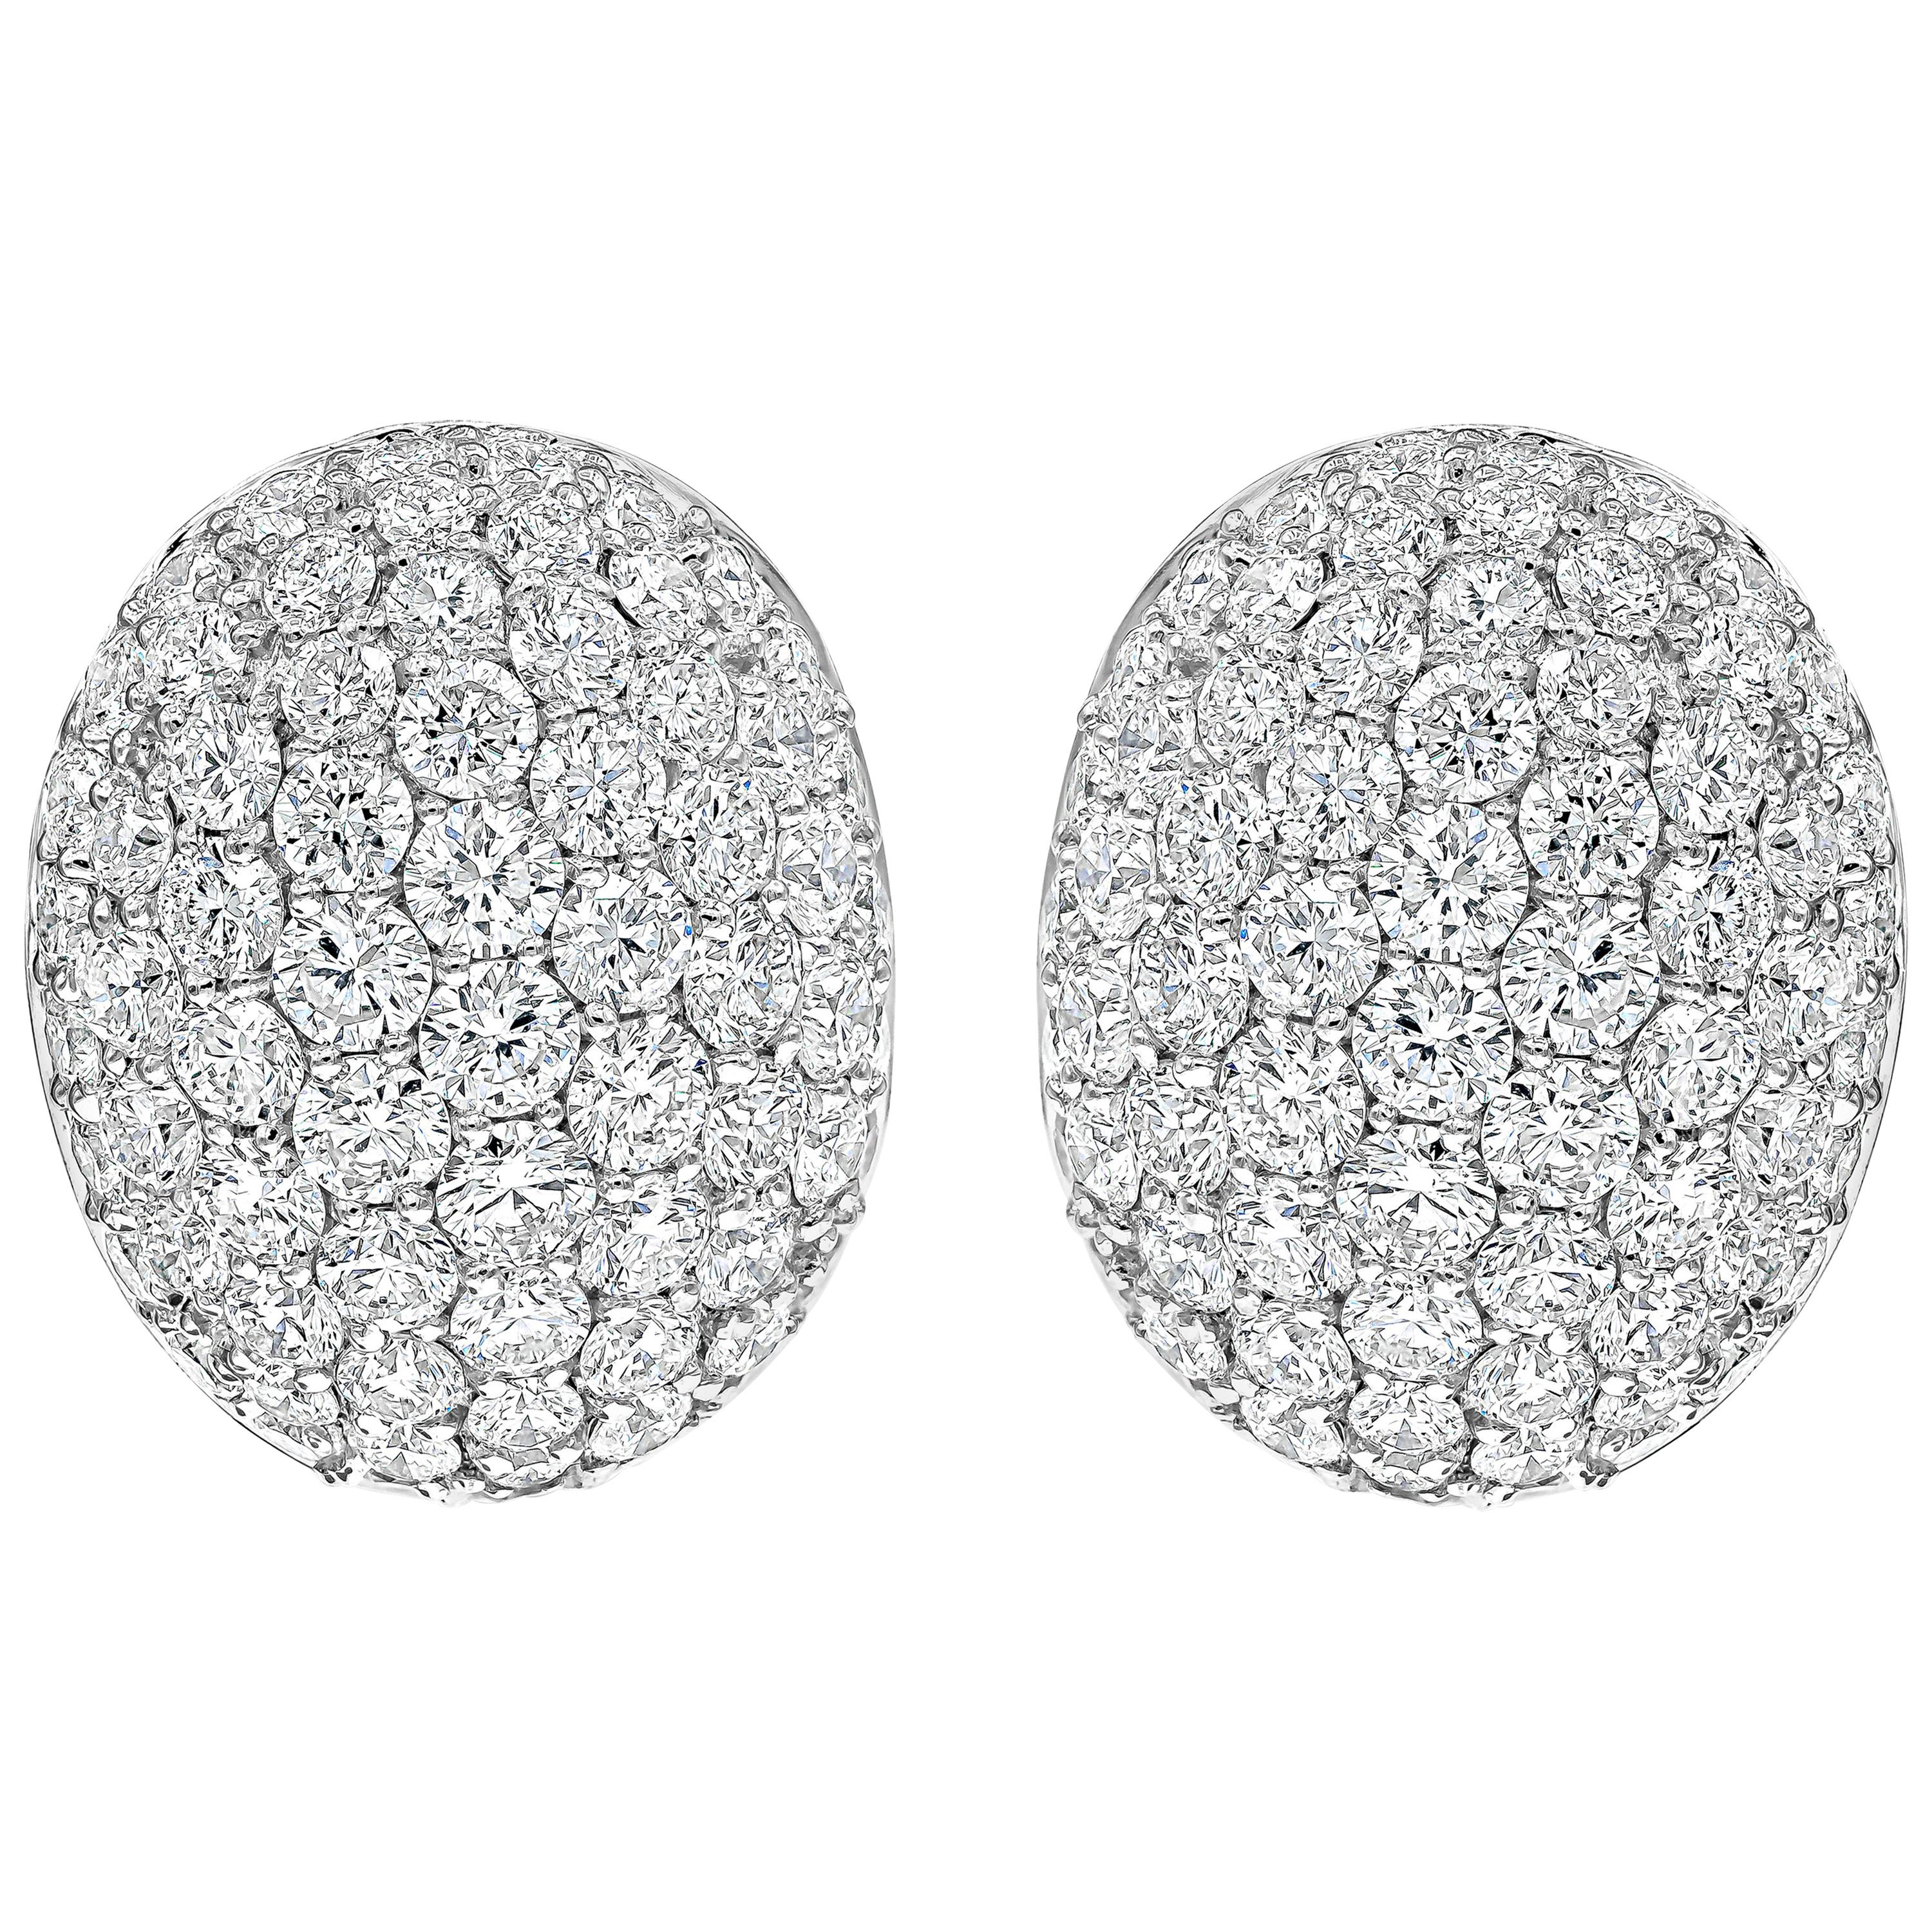 Ovale Ohrclips mit 6,43 Karat rundem Brillanten und Mikro-Pavé-Diamanten